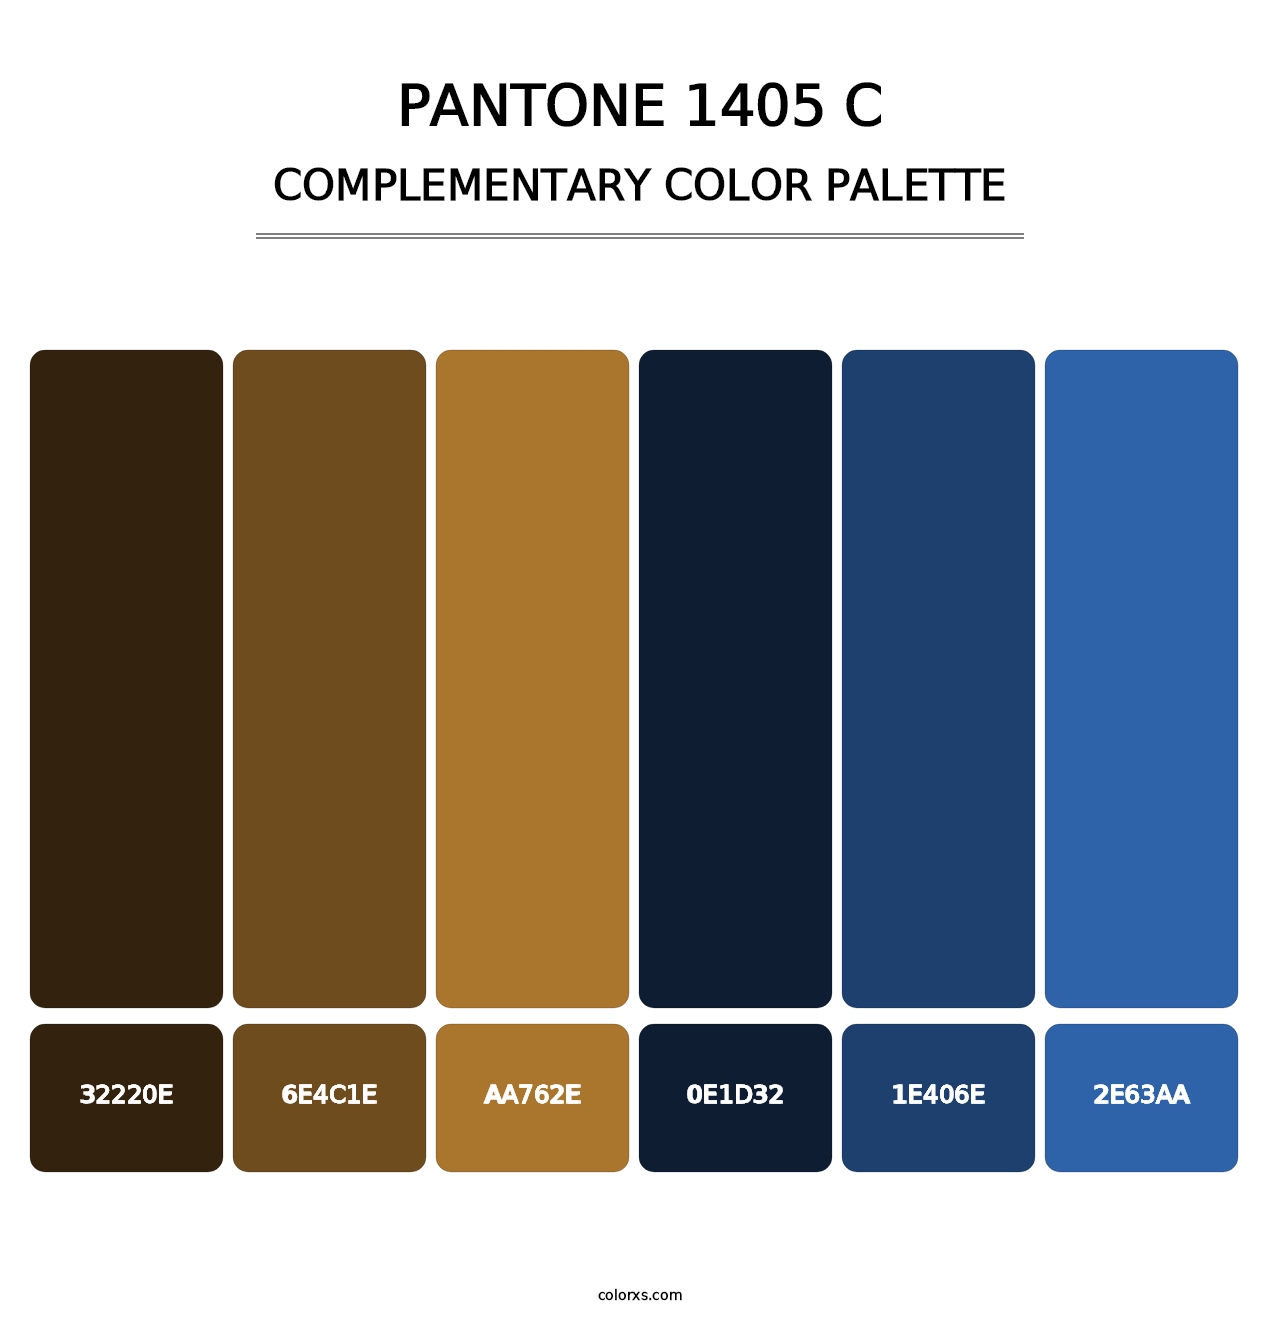 PANTONE 1405 C - Complementary Color Palette